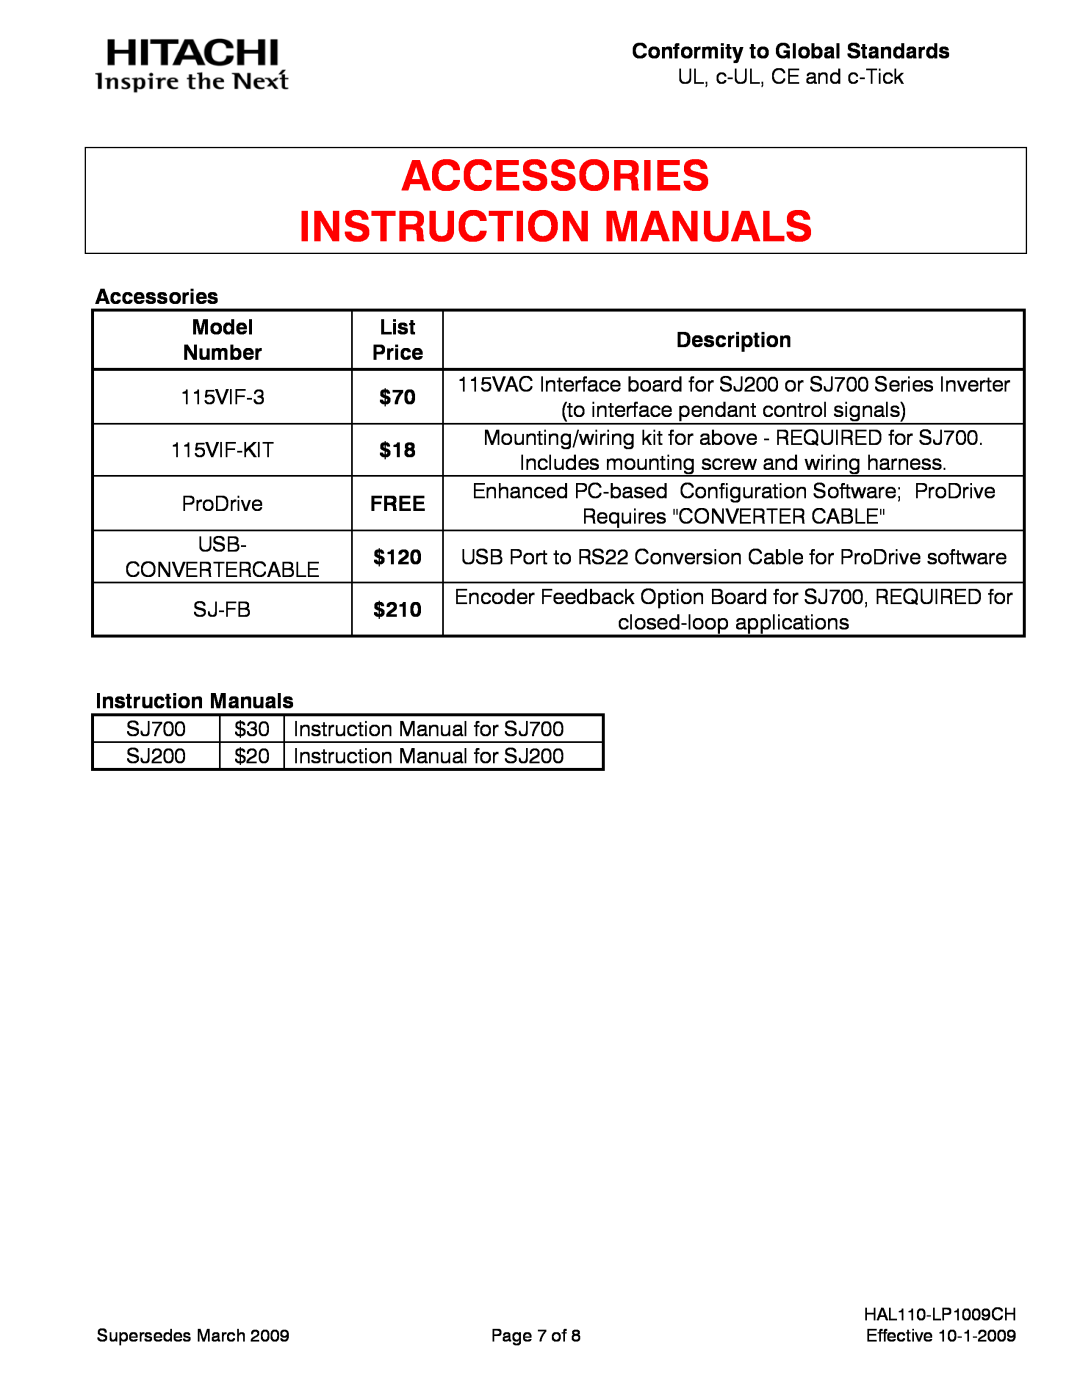 Hitachi sj200, SJ700 manual Accessories, Instruction Manuals, $120, $210, Conformity to Global Standards, Model, Price 